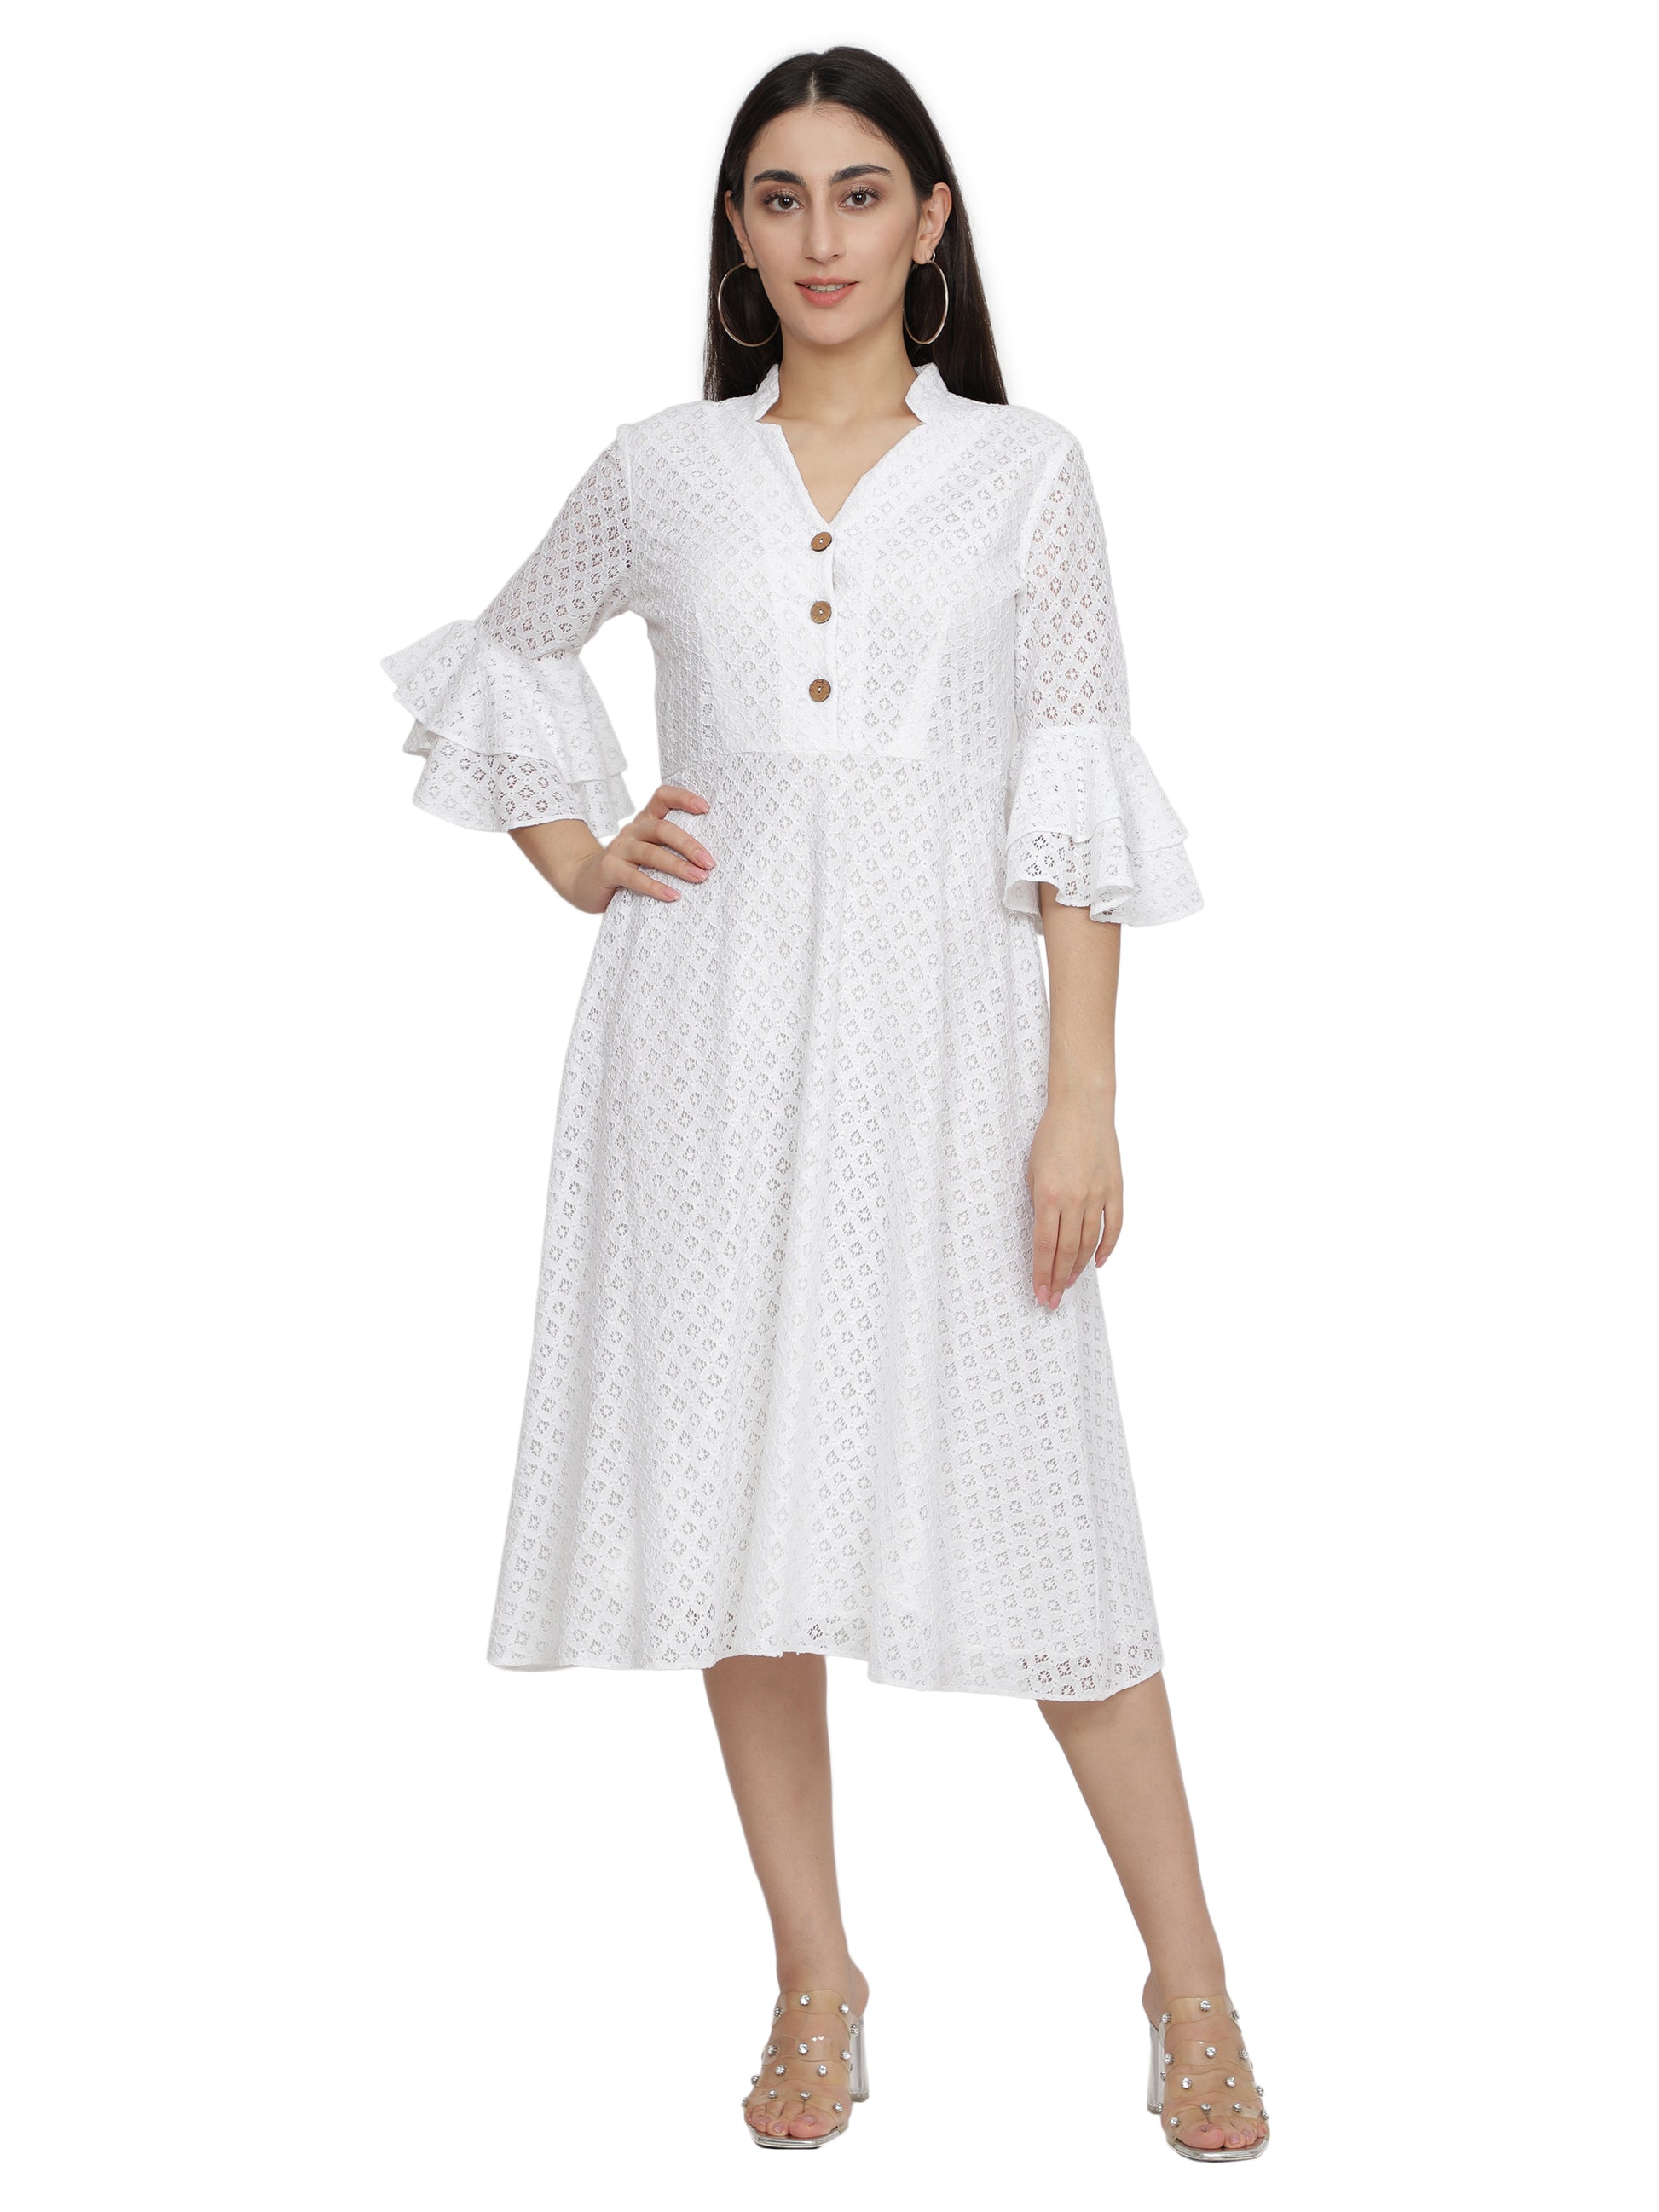 Women A-line White Dress freeshipping - NUEVOSDAMAS